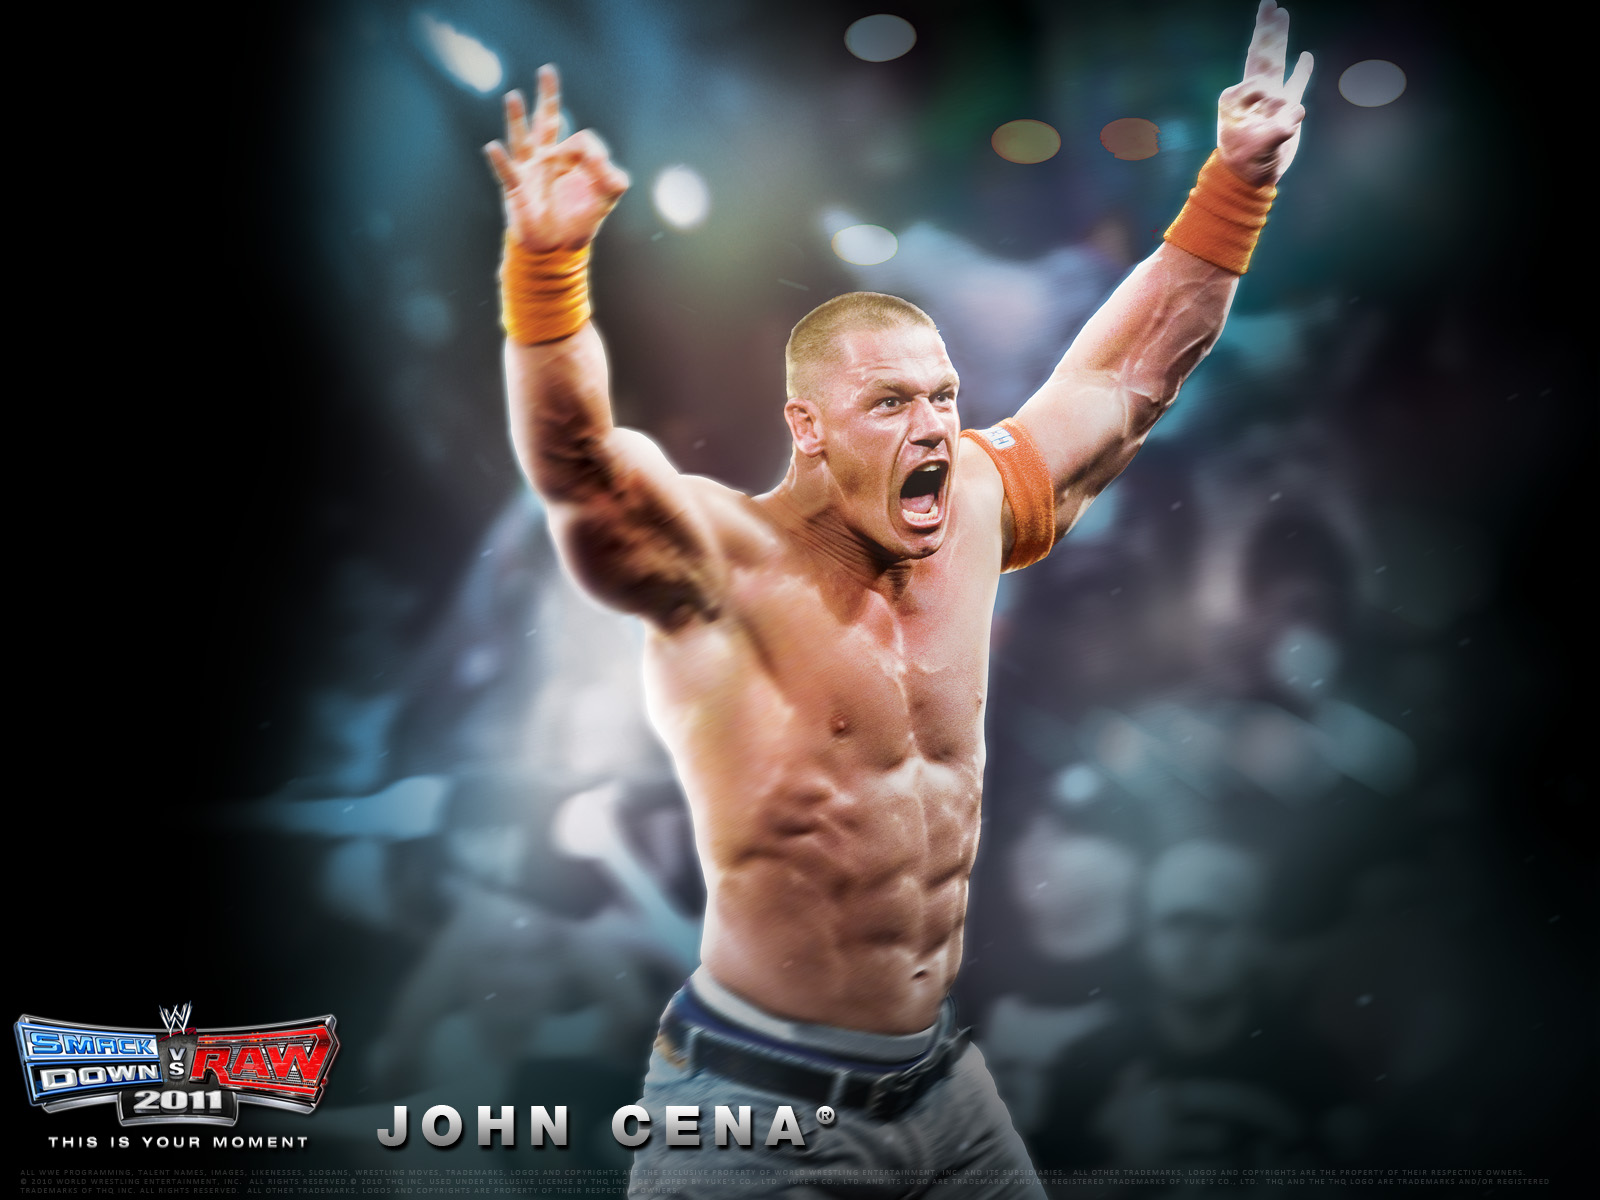 New Cool John Cena Wallpaper Soft